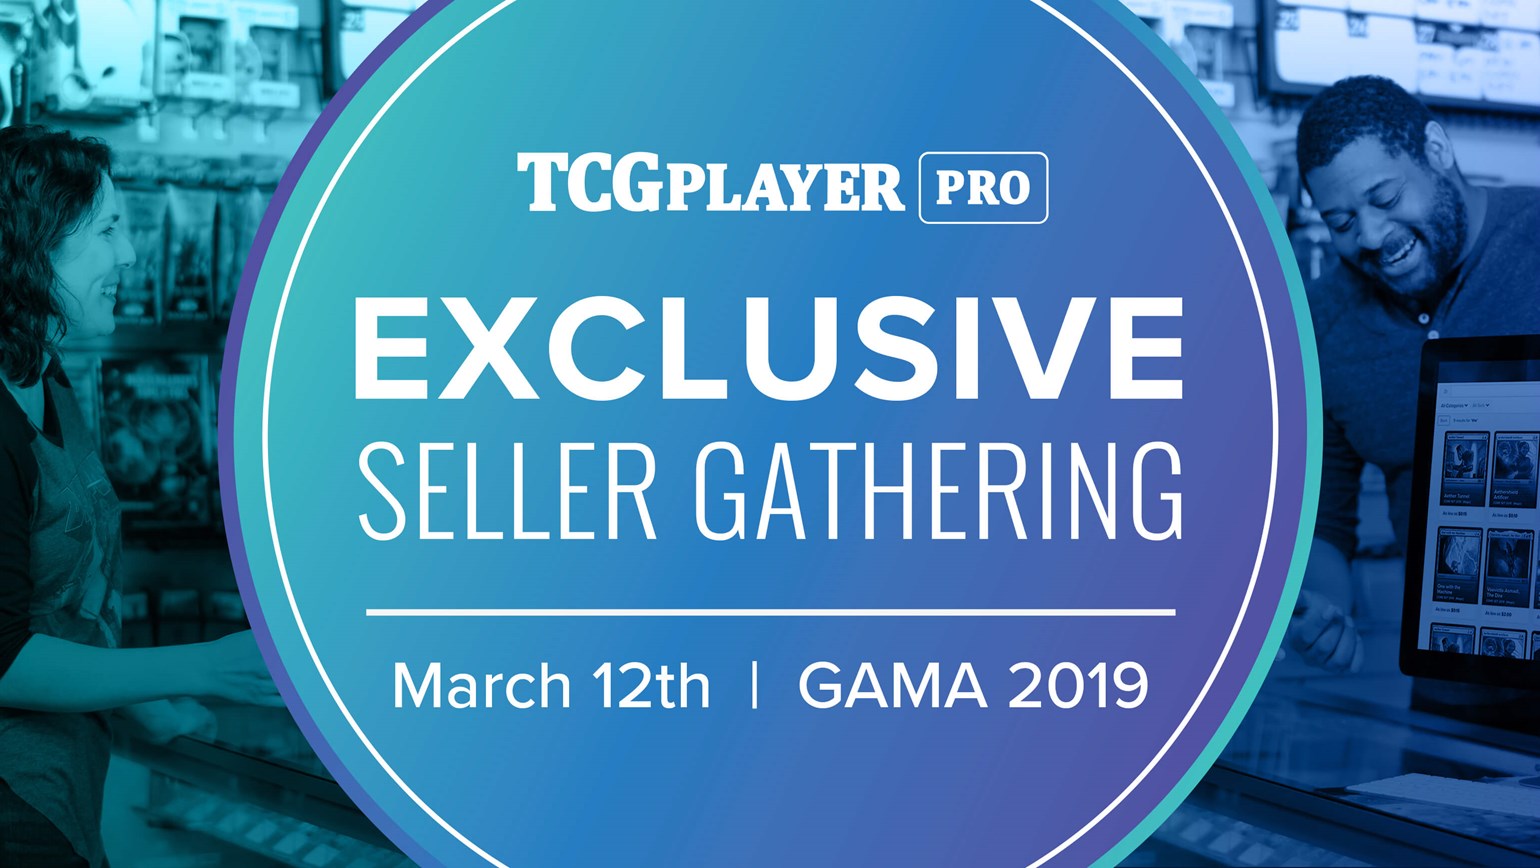 Join TCGplayer at GAMA 2019 in Reno